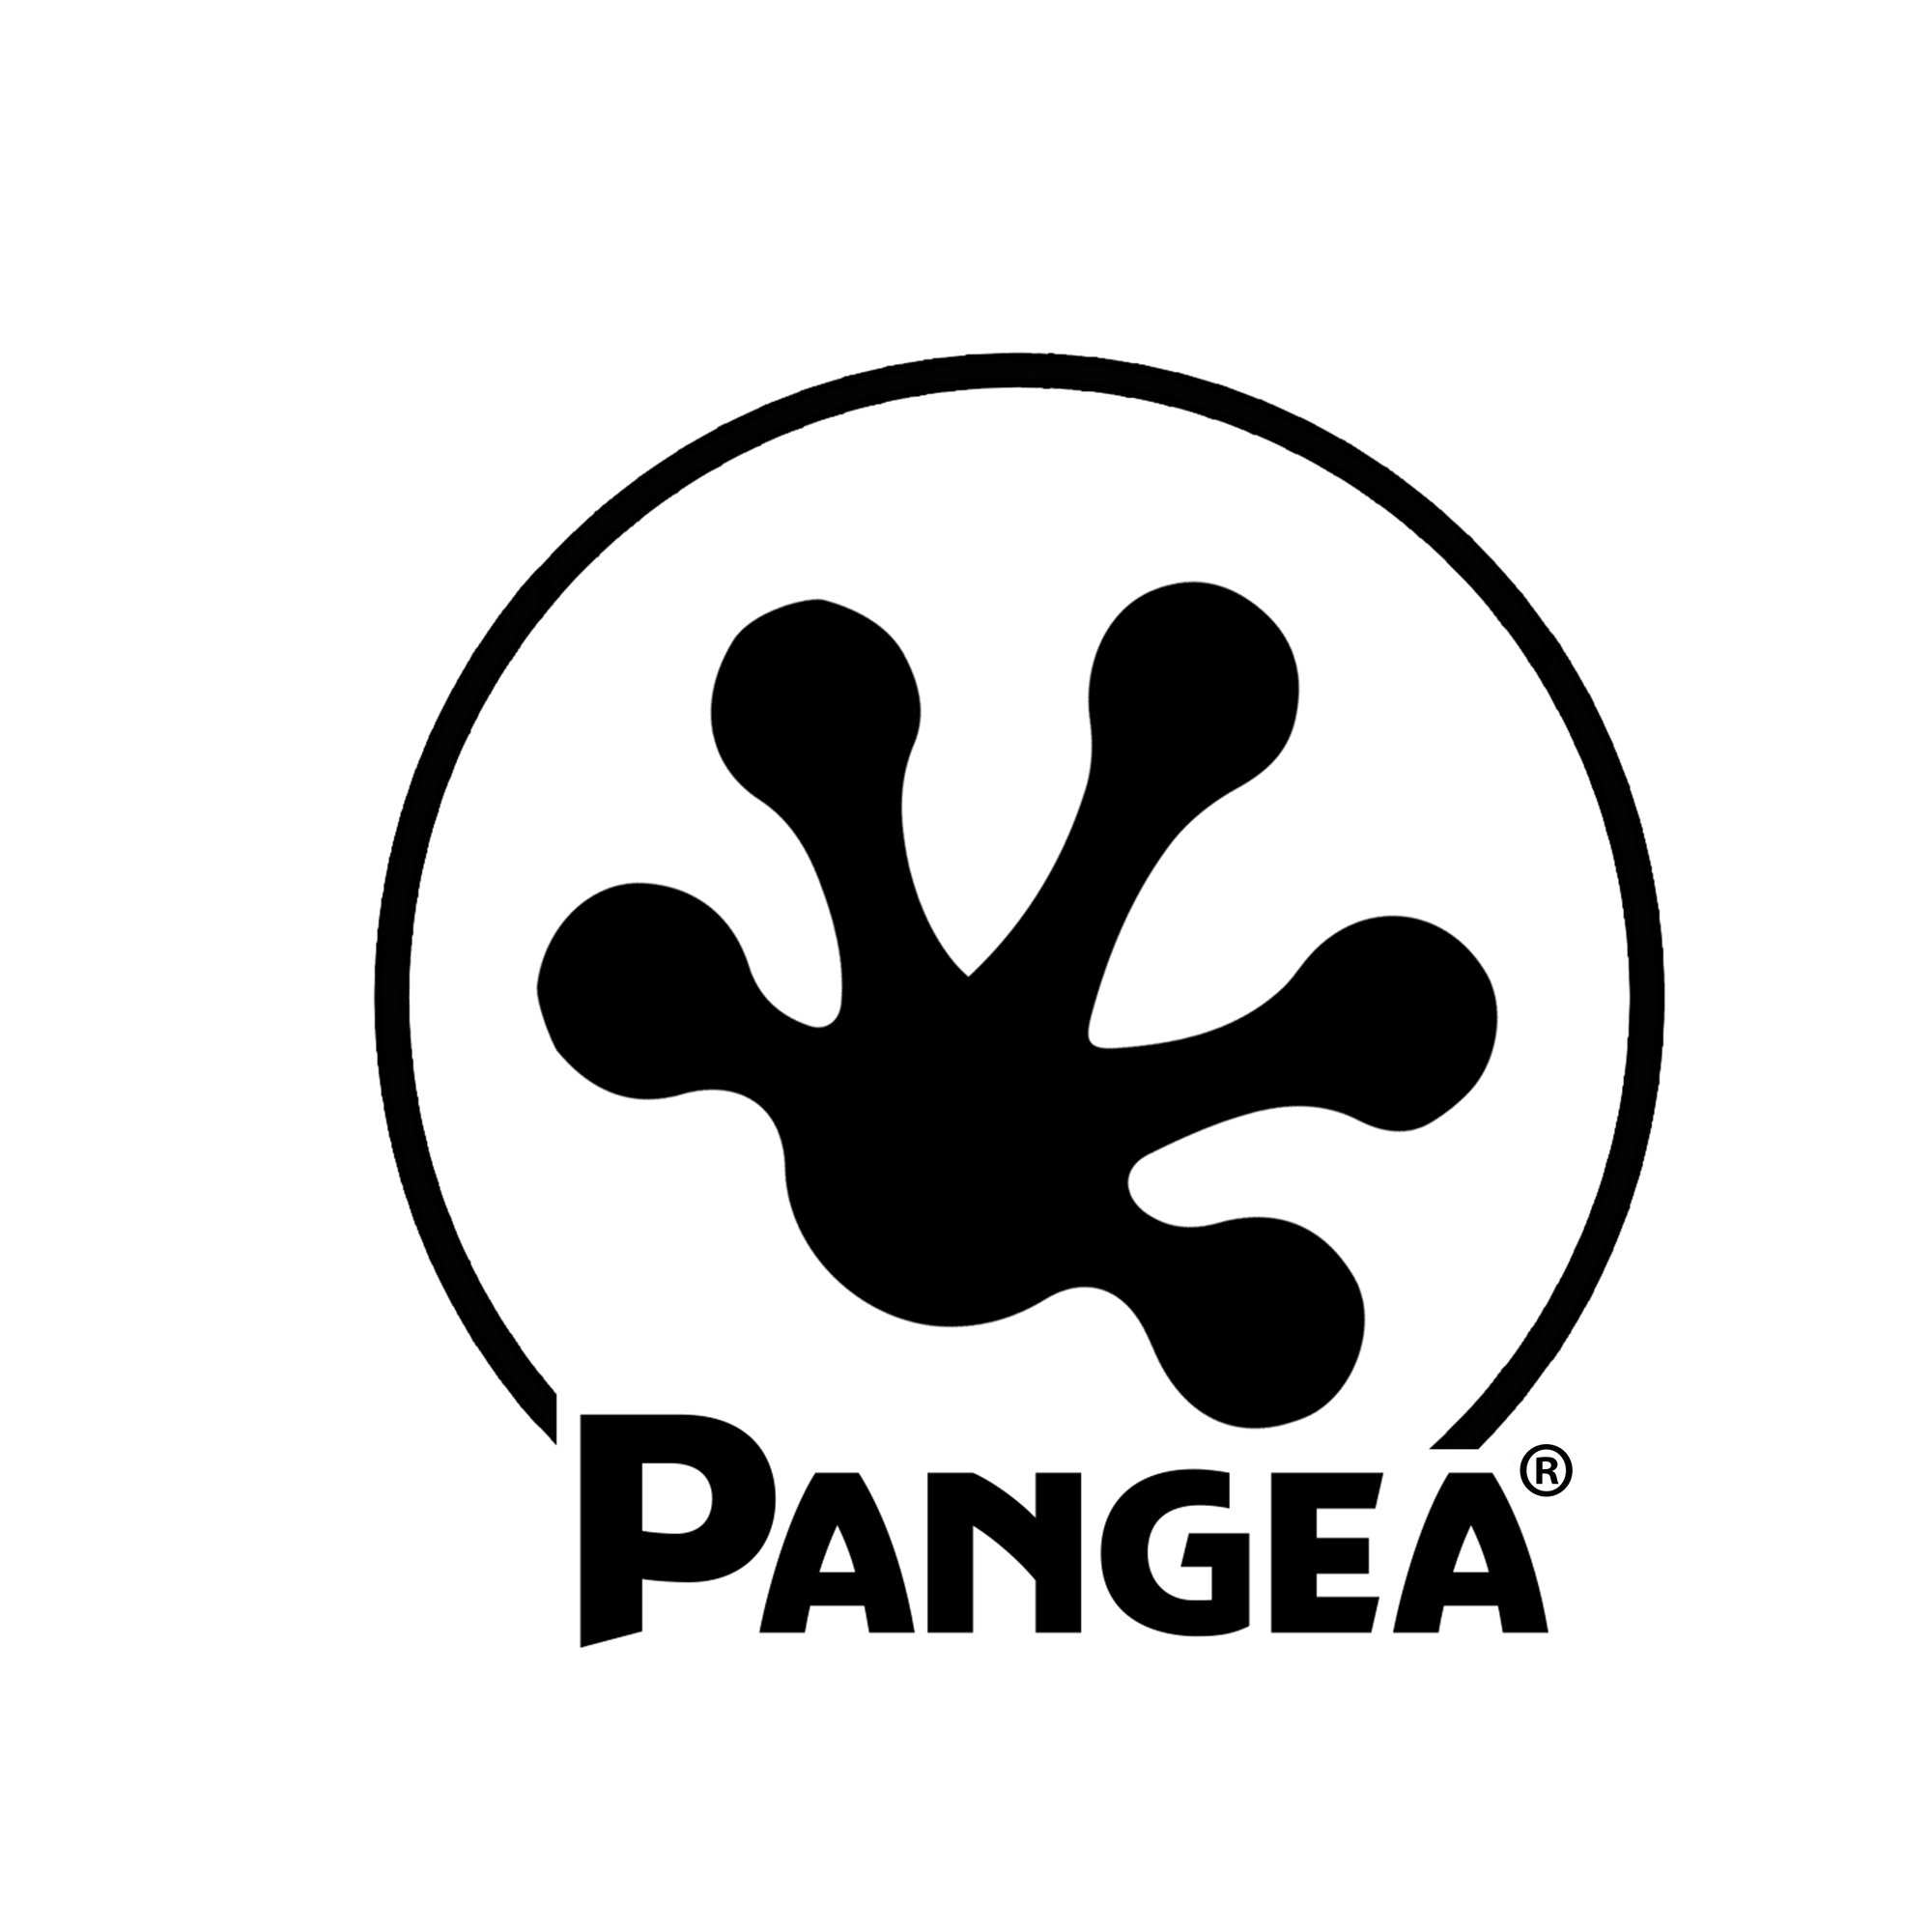 Pangea Online Store Logo